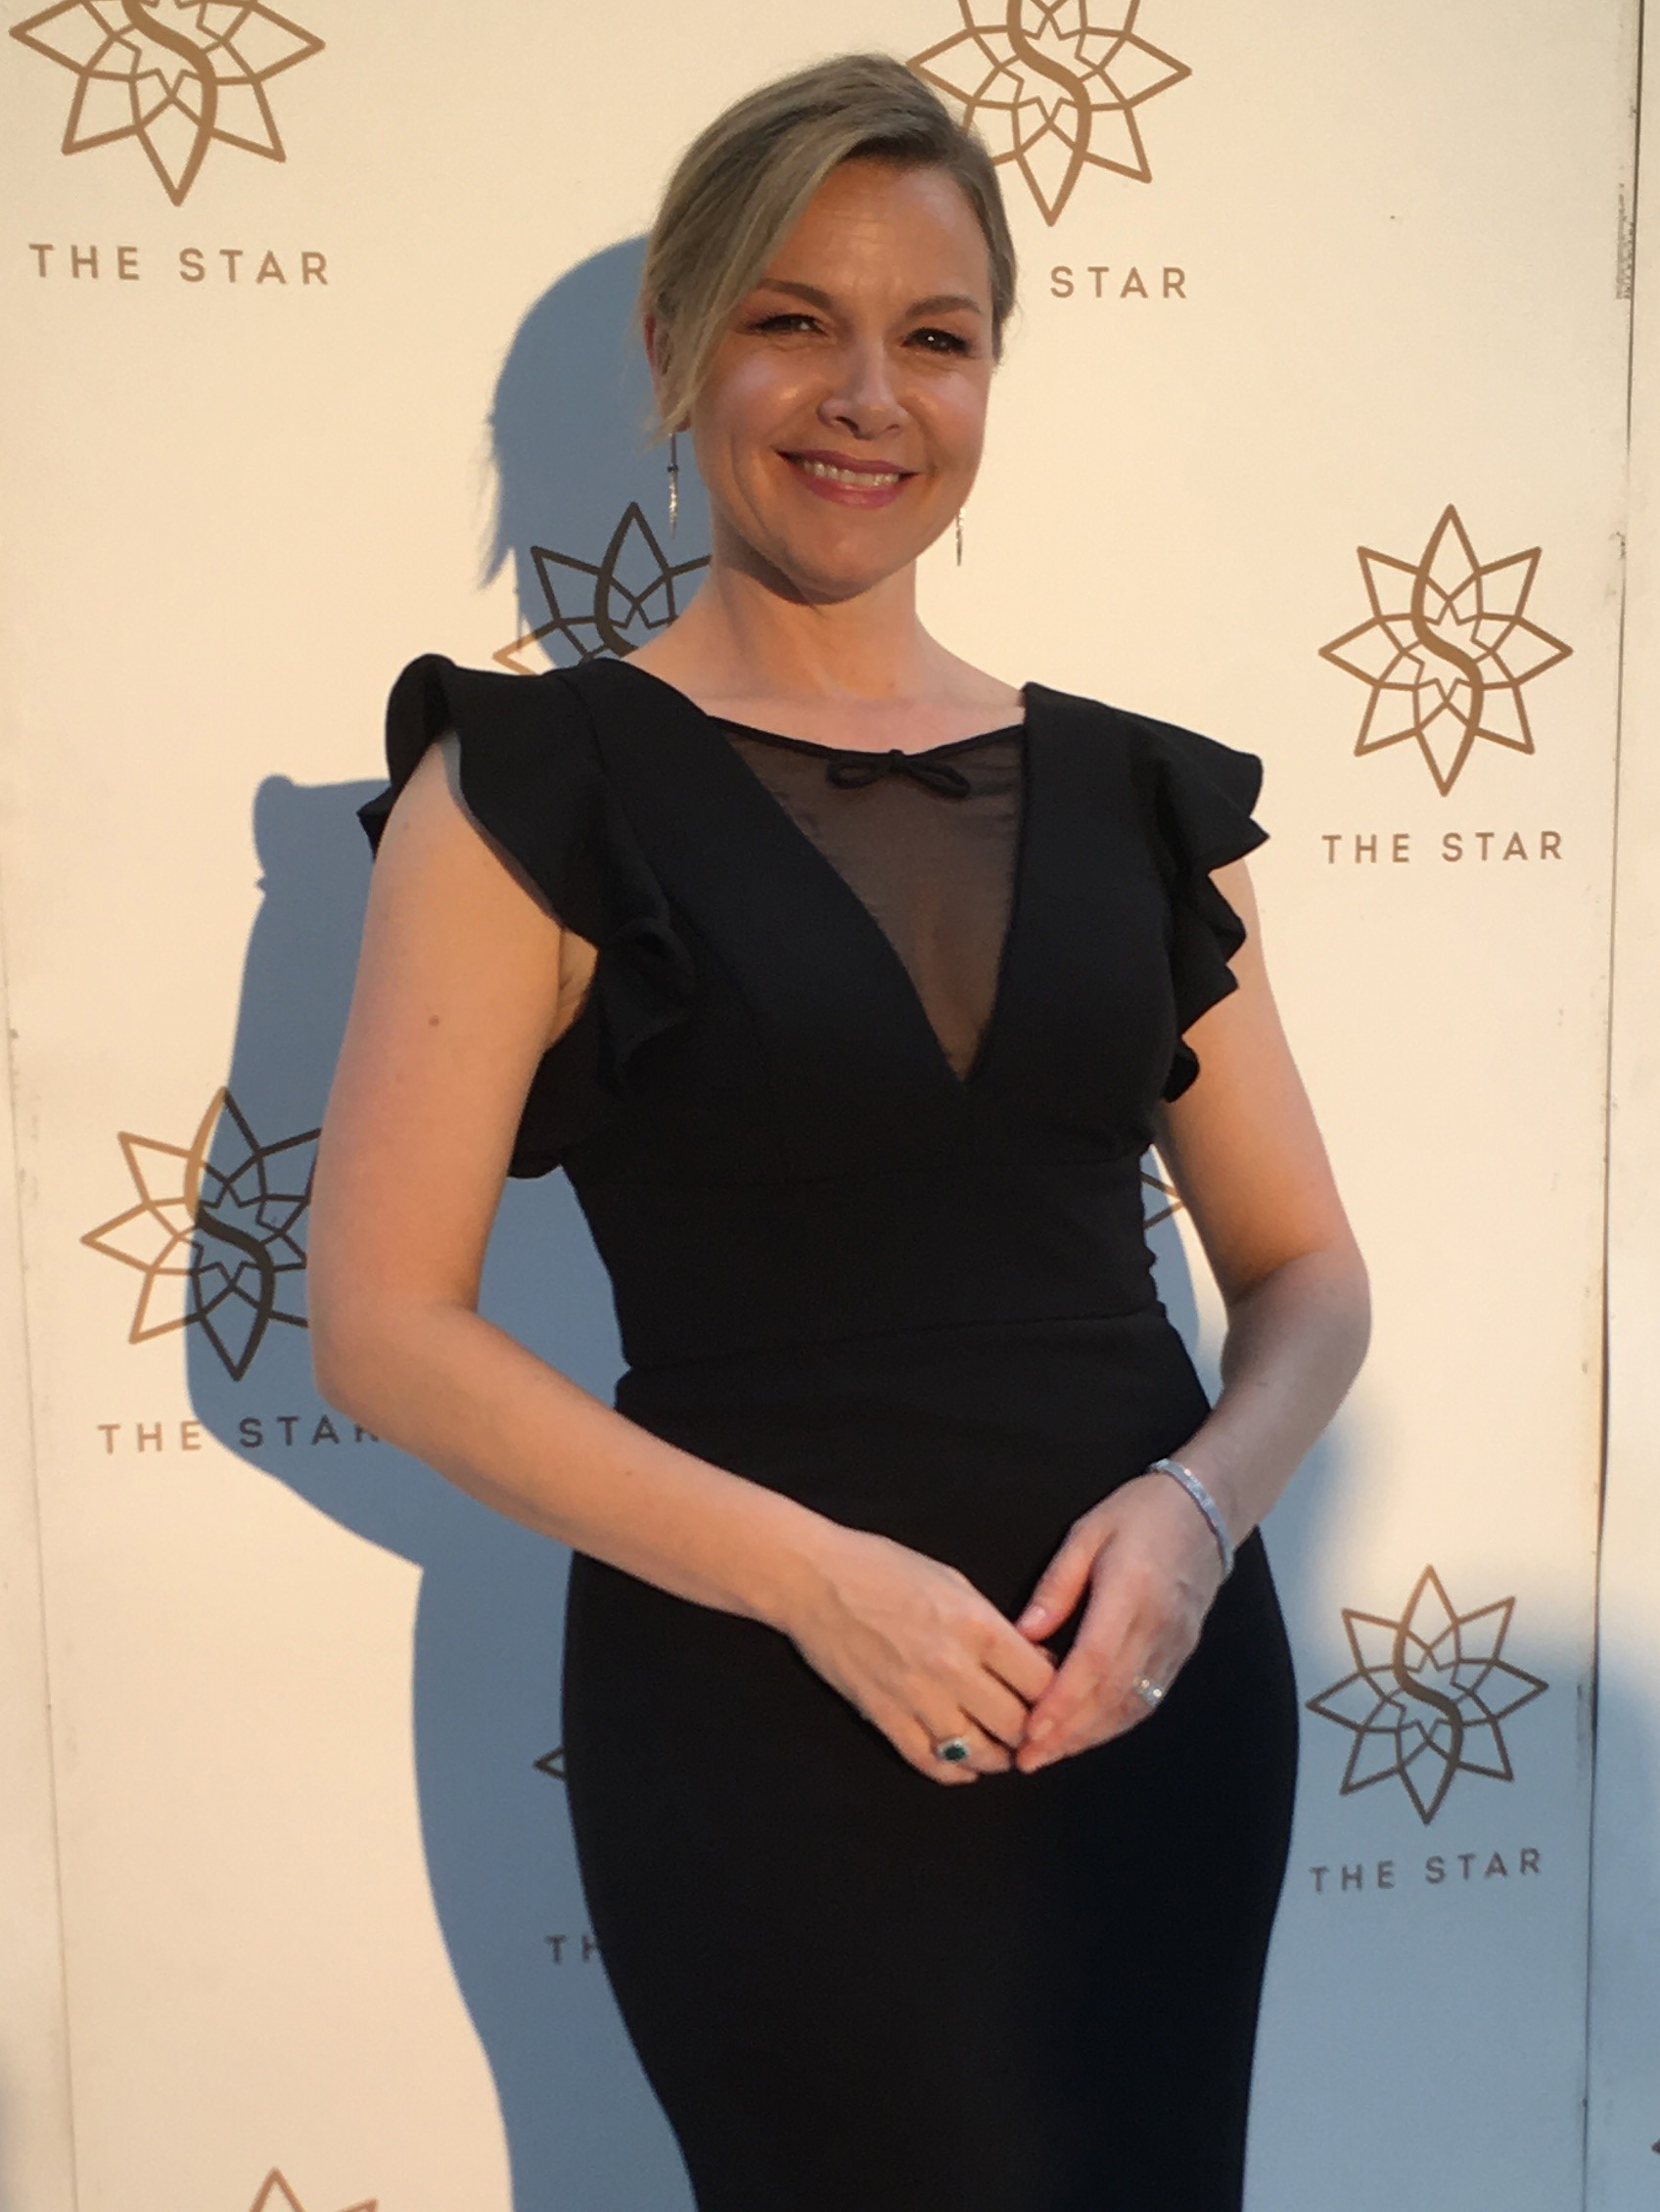 Clarke at the 2018 ARIA Awards in Sydney, Australia